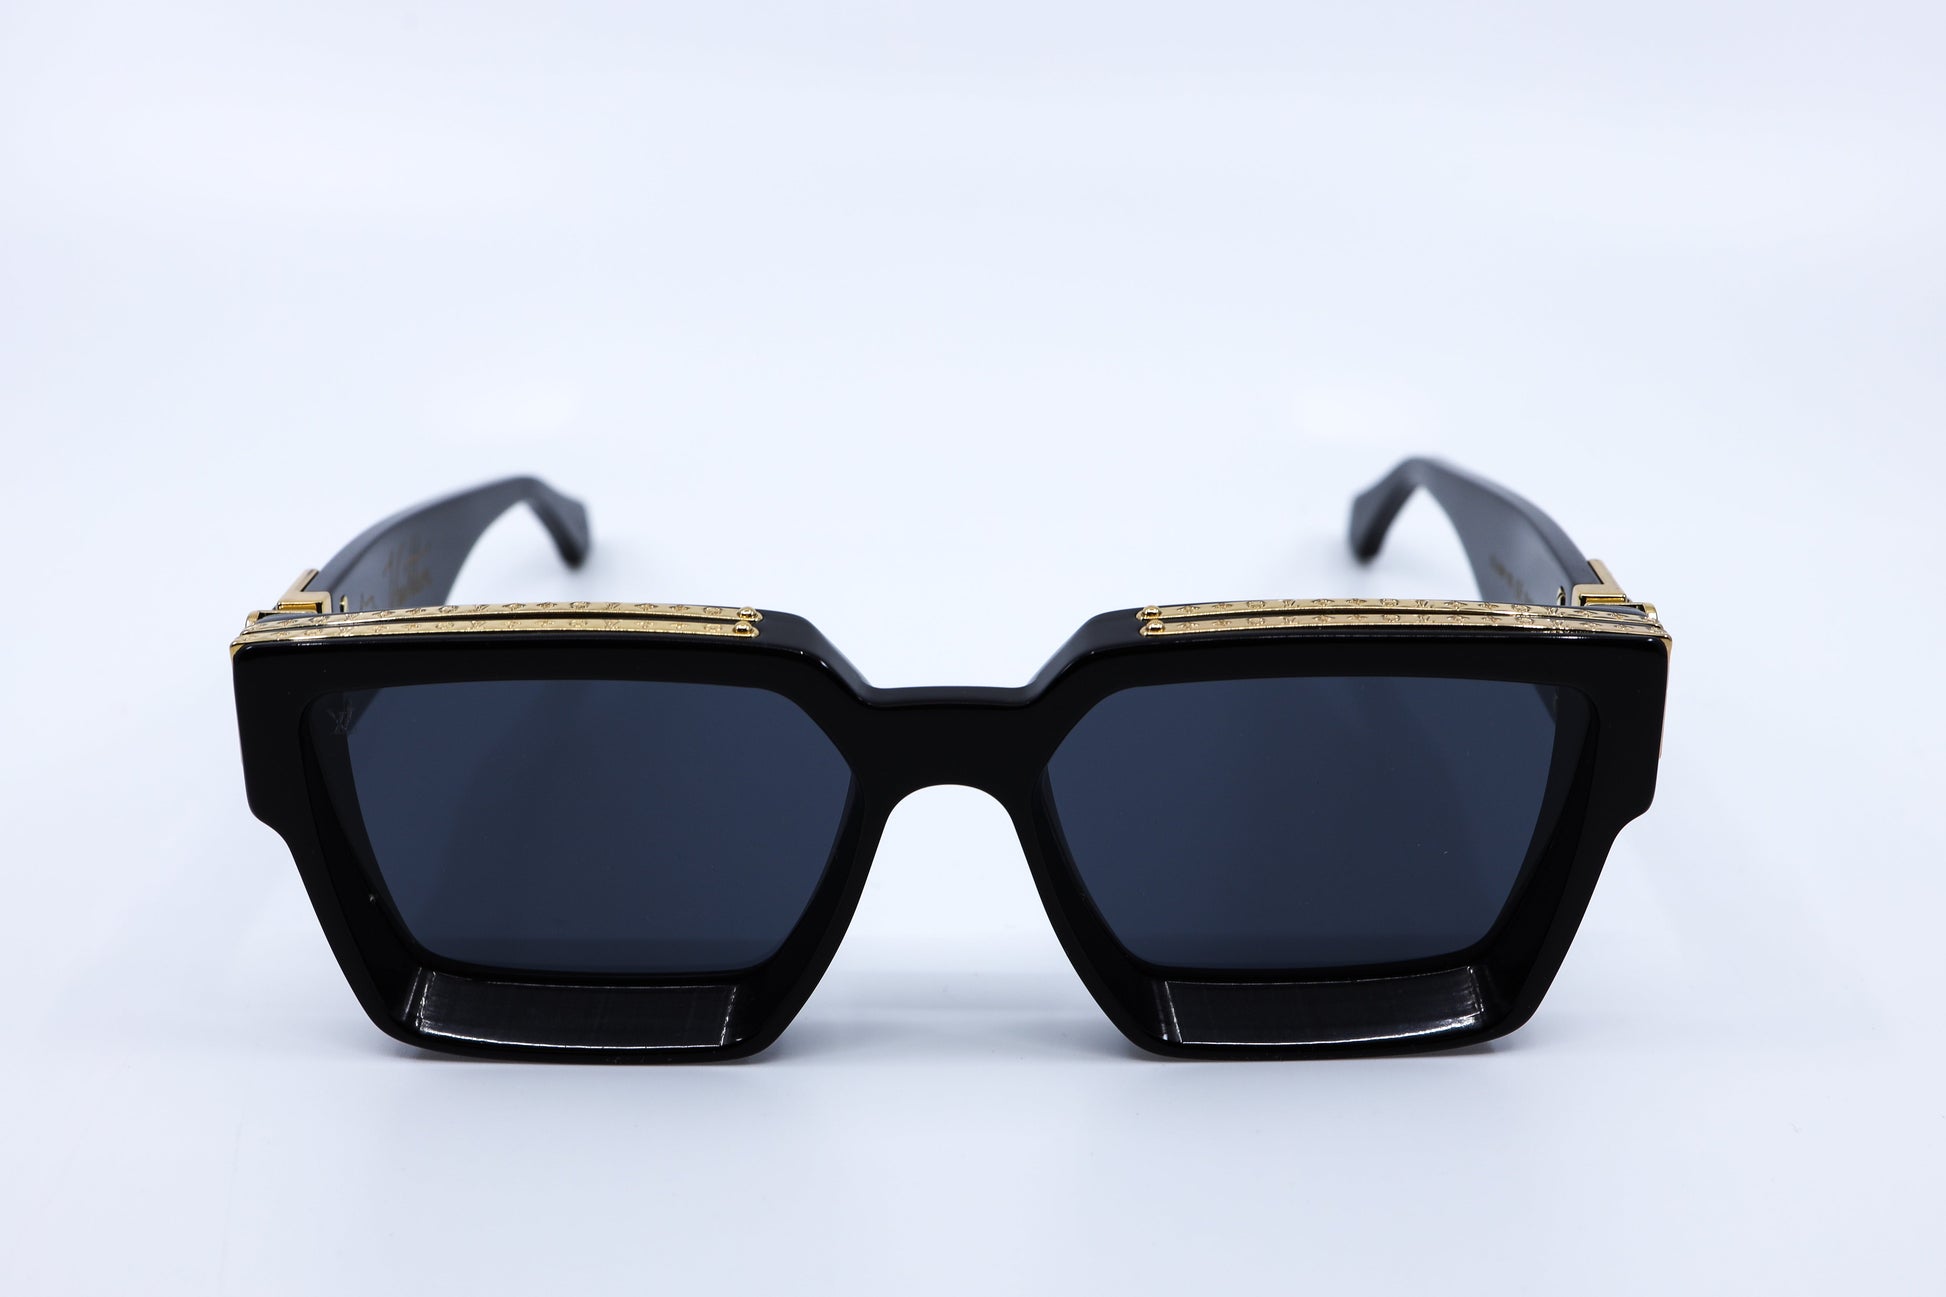 sunglasses 1.1 millionaire